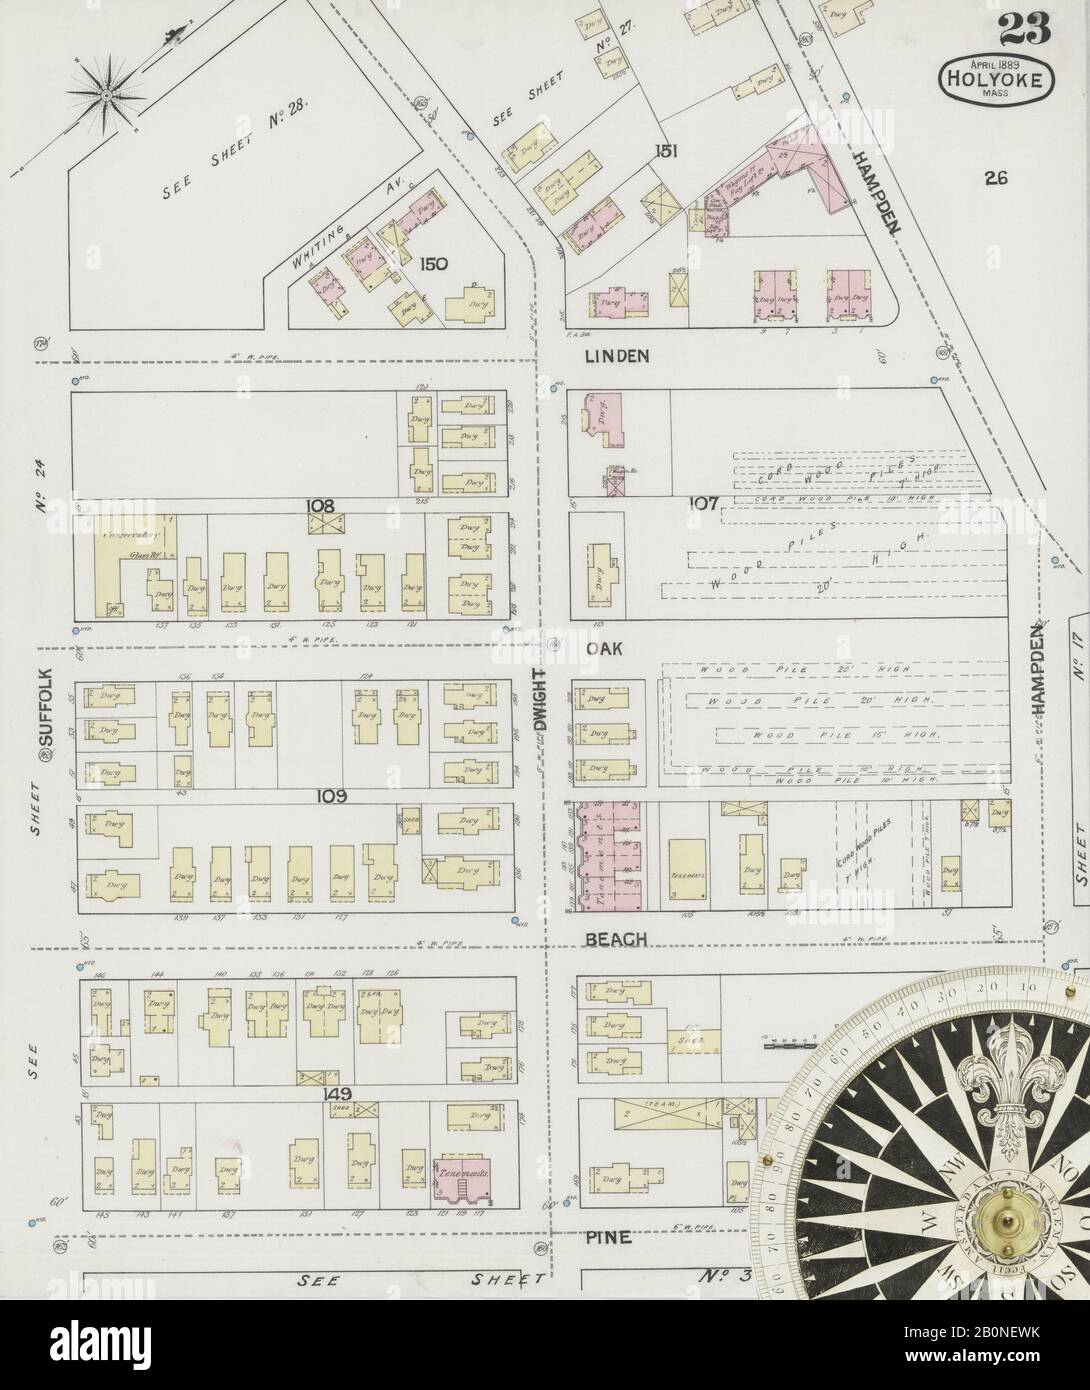 Bild 23 von Sanborn Fire Insurance Map aus Holyoke, Hampden County, Massachusetts. Apr. 30 Blatt(e), Amerika, Straßenkarte mit einem Kompass Aus Dem 19. Jahrhundert Stockfoto